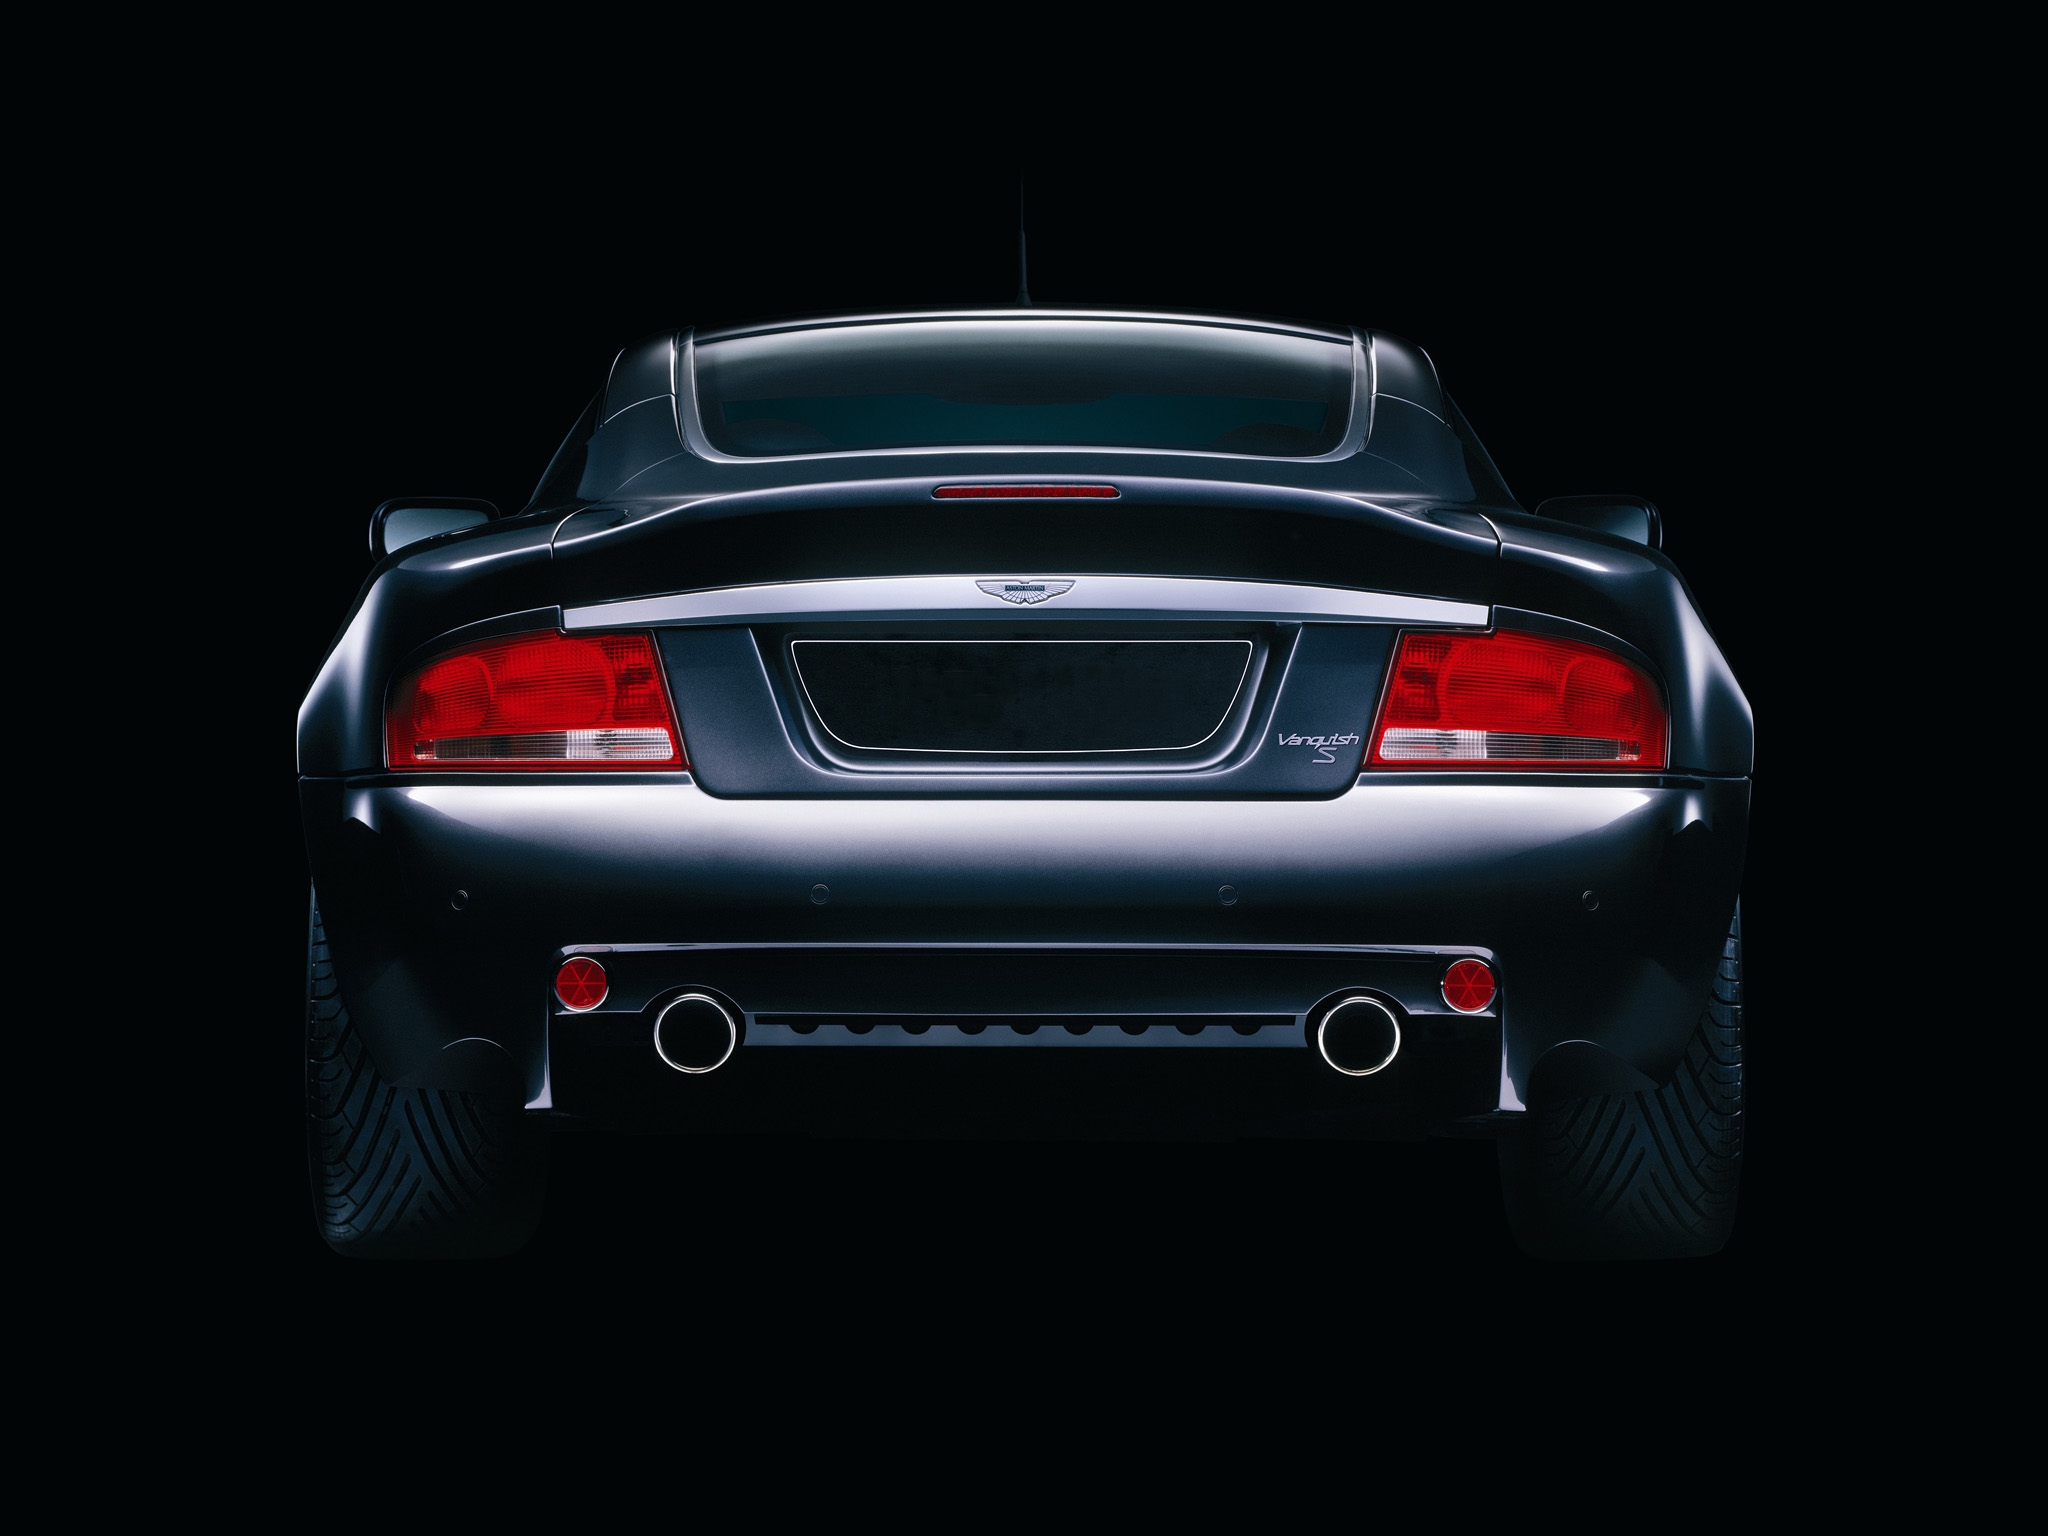 aston martin, cars, black, back view, rear view, style, 2004, v12, vanquish